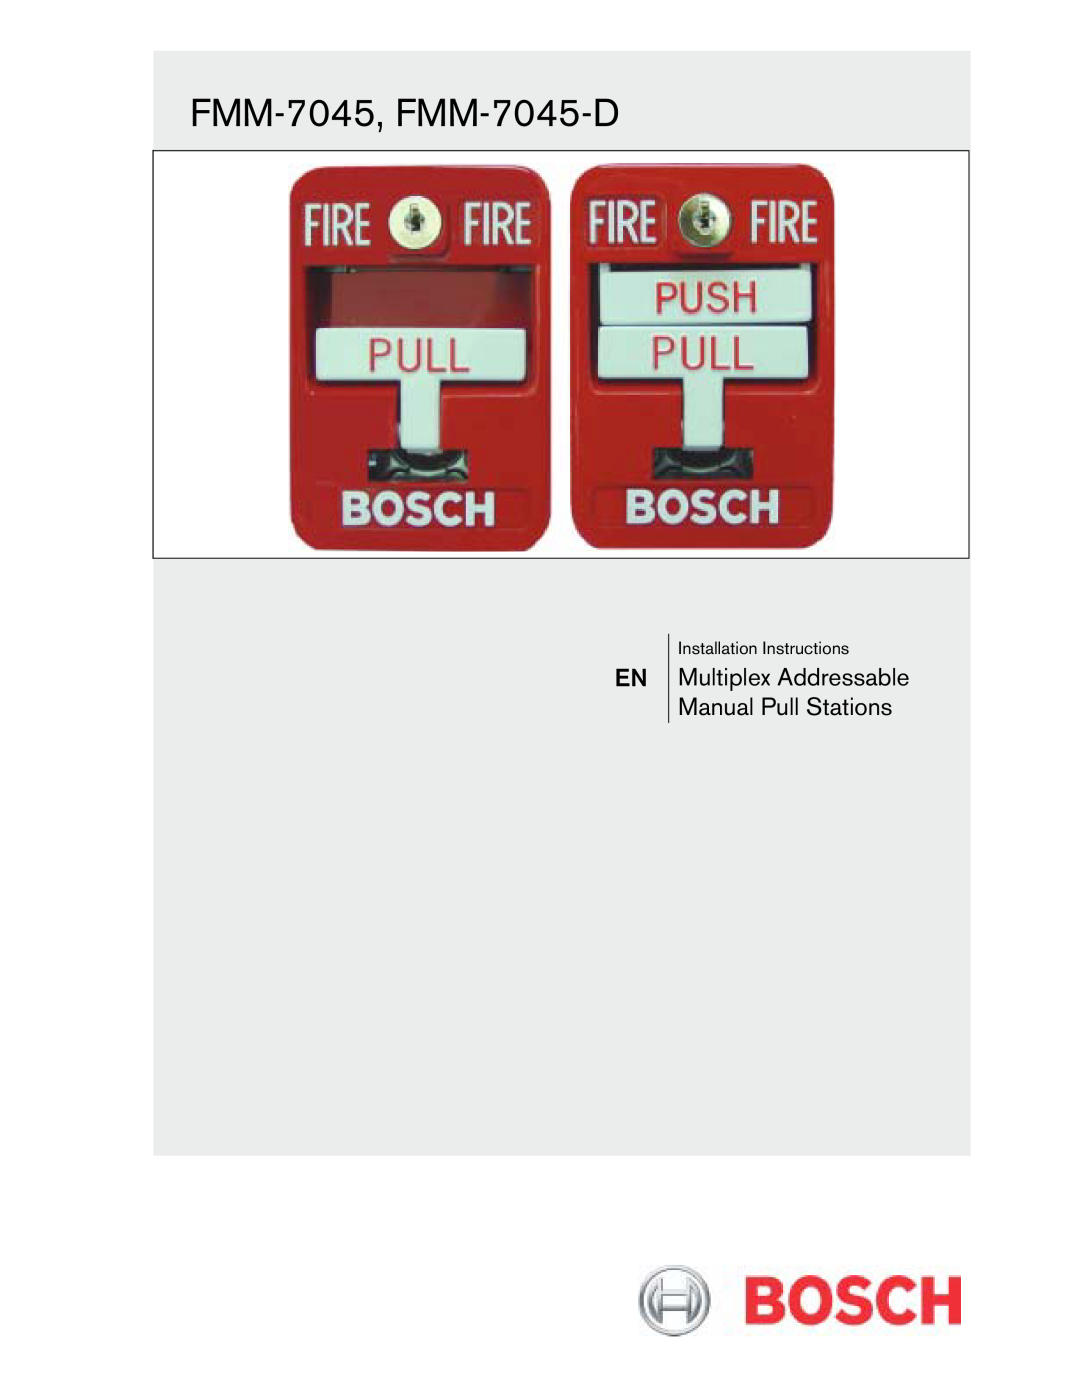 Bosch Appliances installation instructions FMM-7045, FMM-7045-D, Multiplex Addressable Manual Pull Stations 